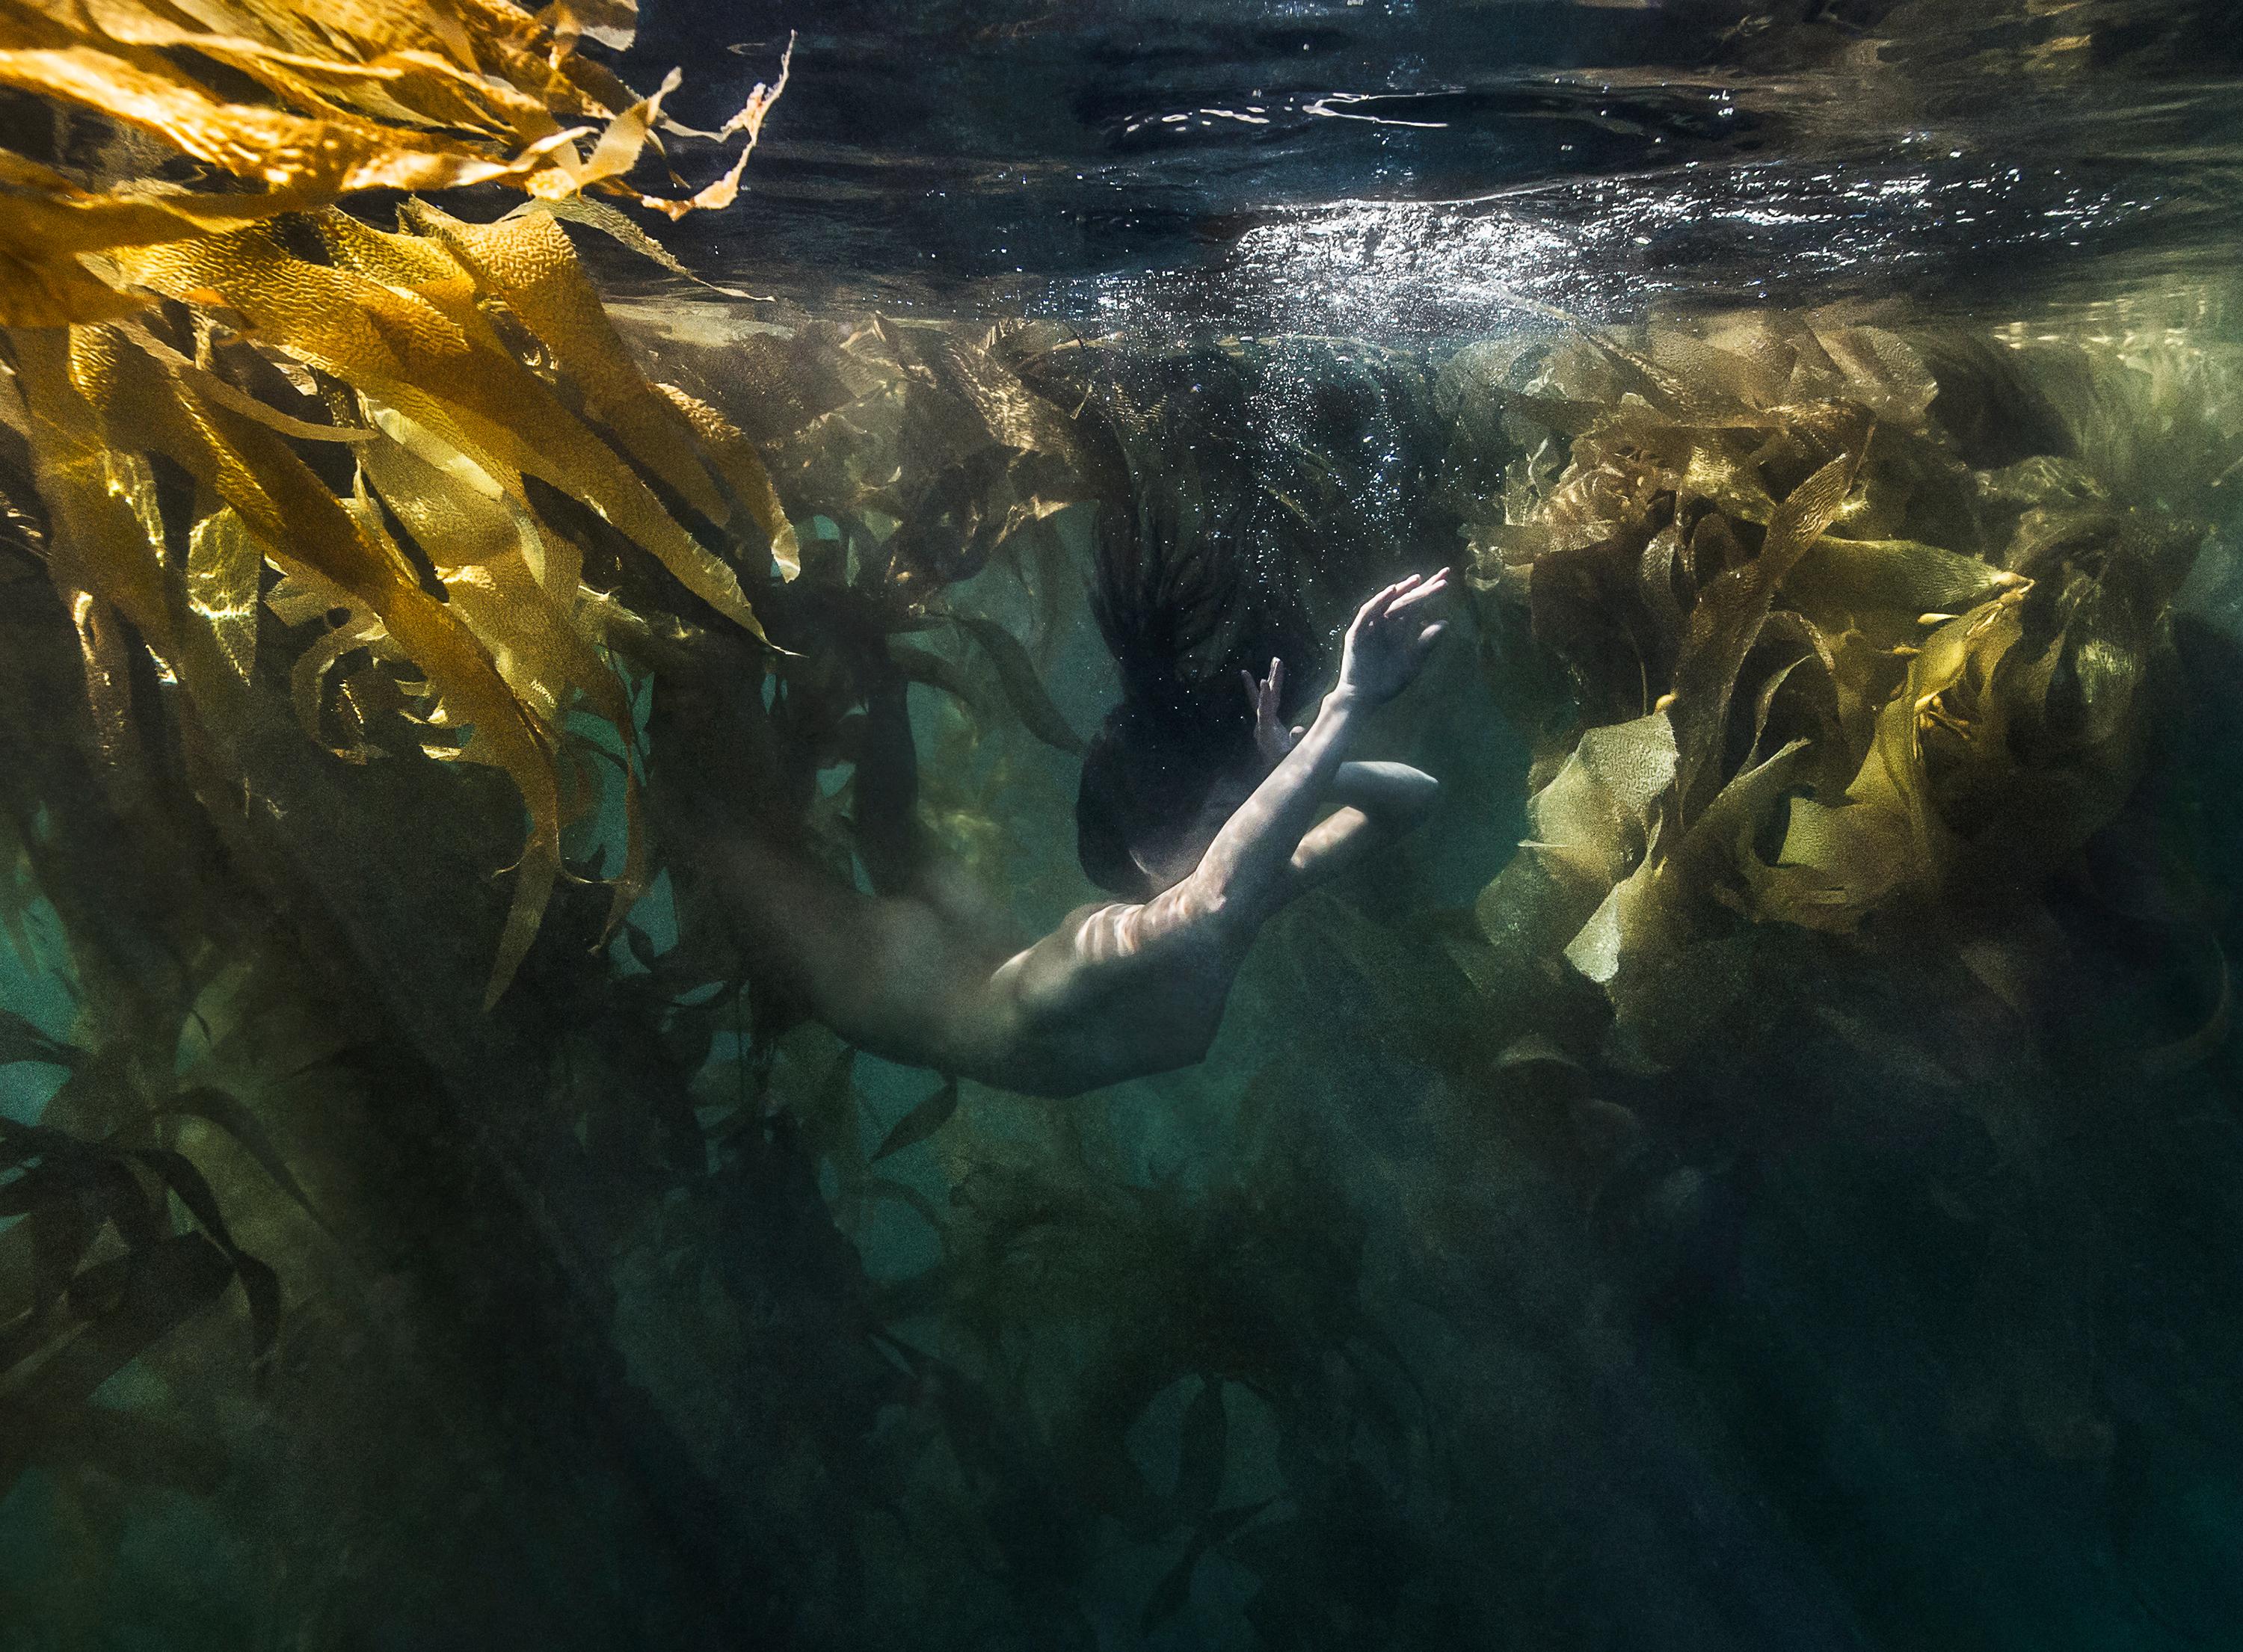 Jungle Mermaid - underwater ocean nude photograph - archival pigment 35